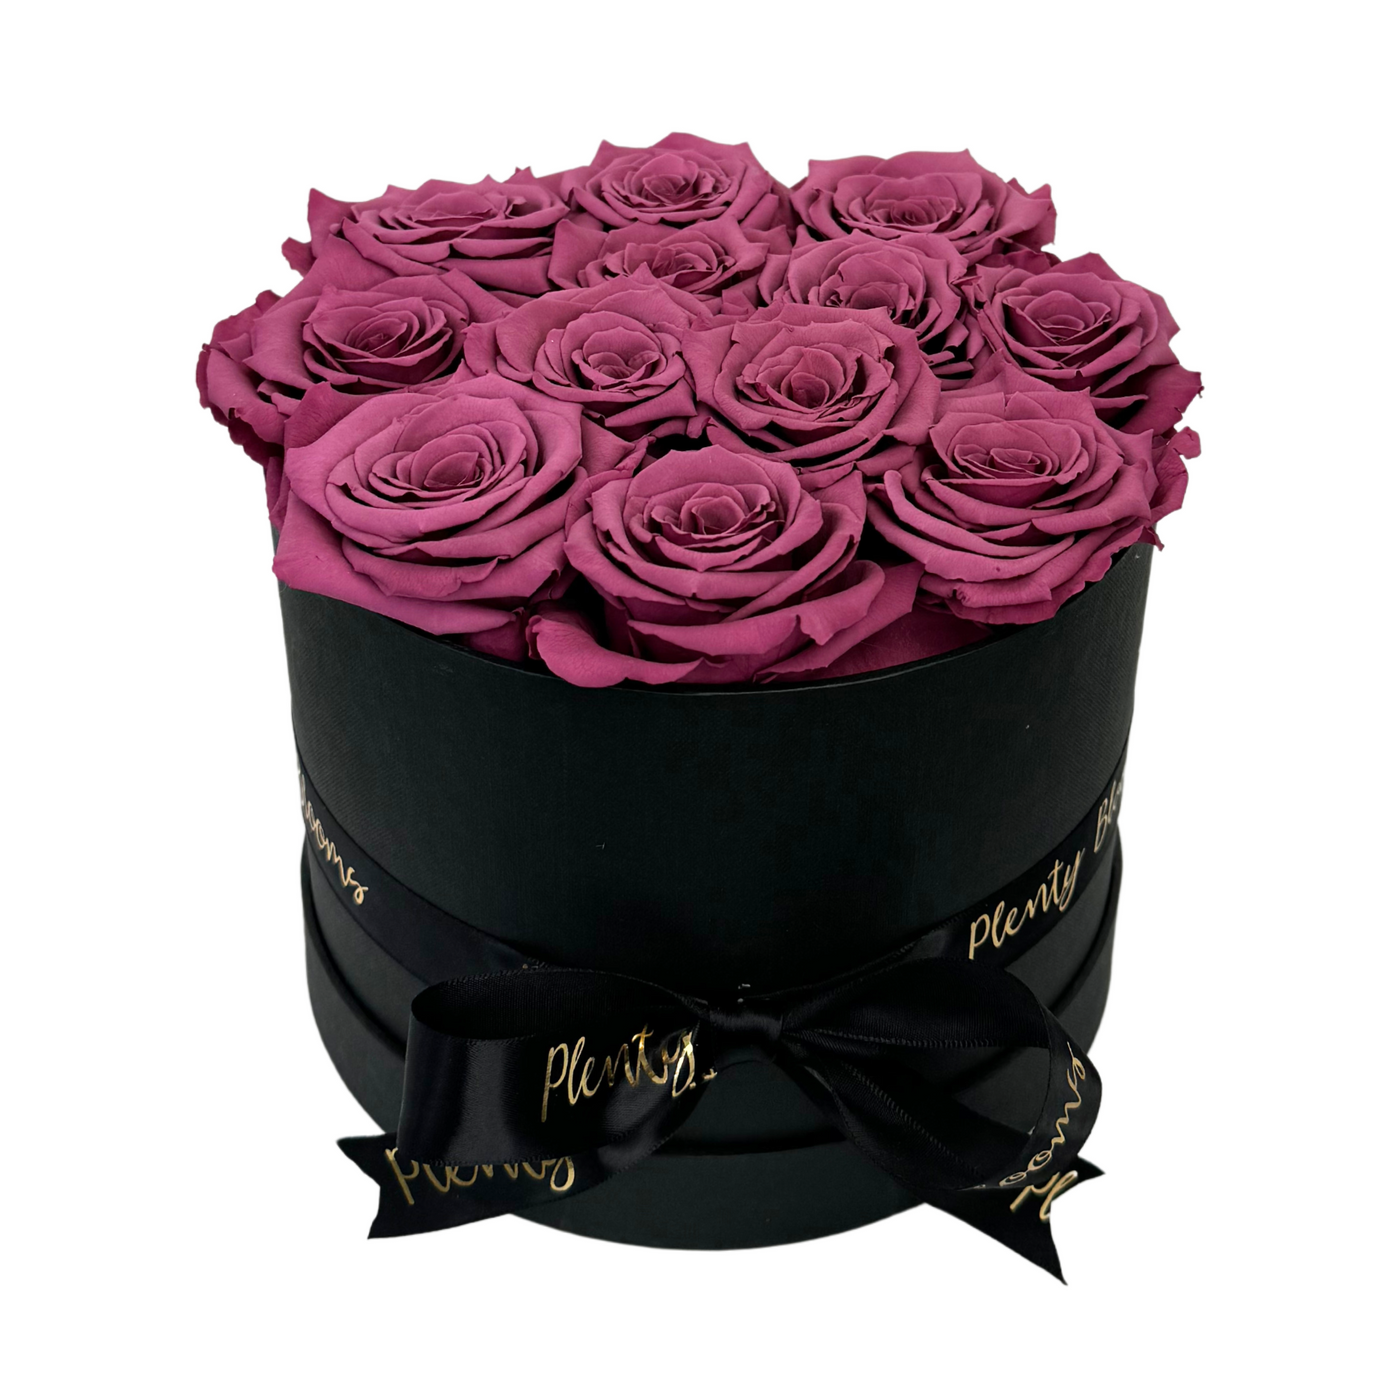 Signature Mauve Preserved Roses Gift Box